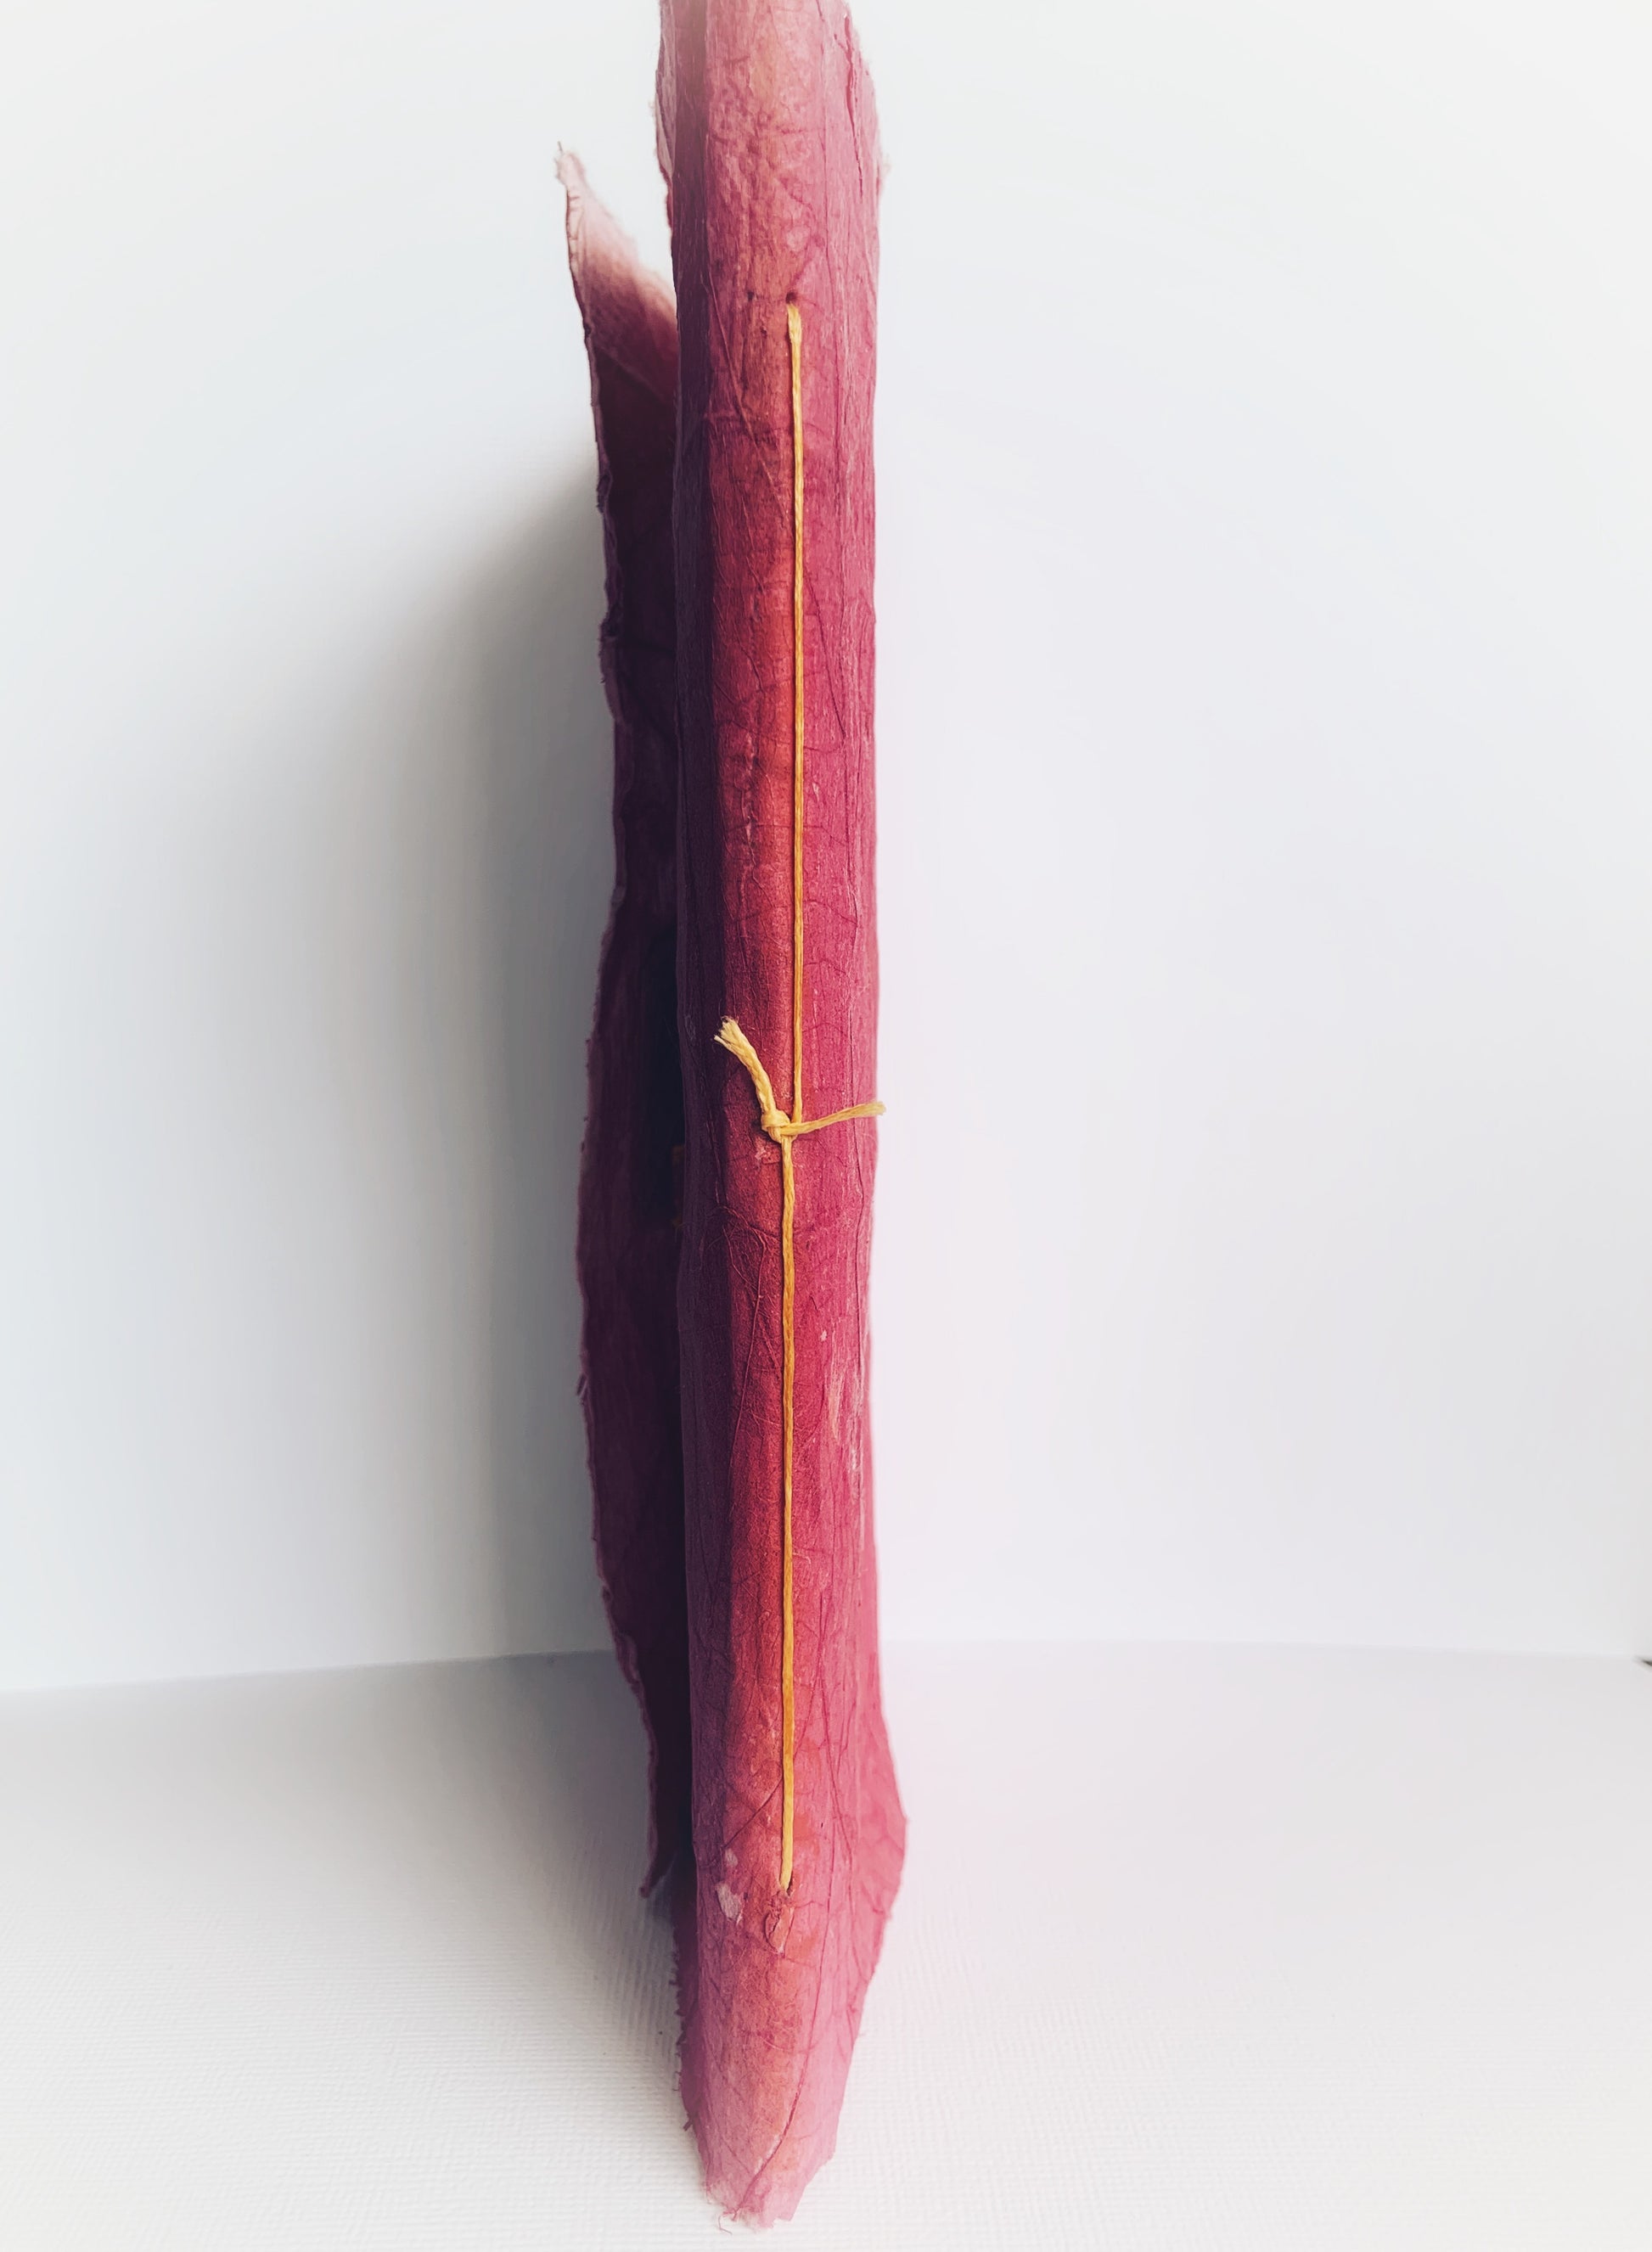 Spine of handmade journal showing orange thread on pink handmade paper.